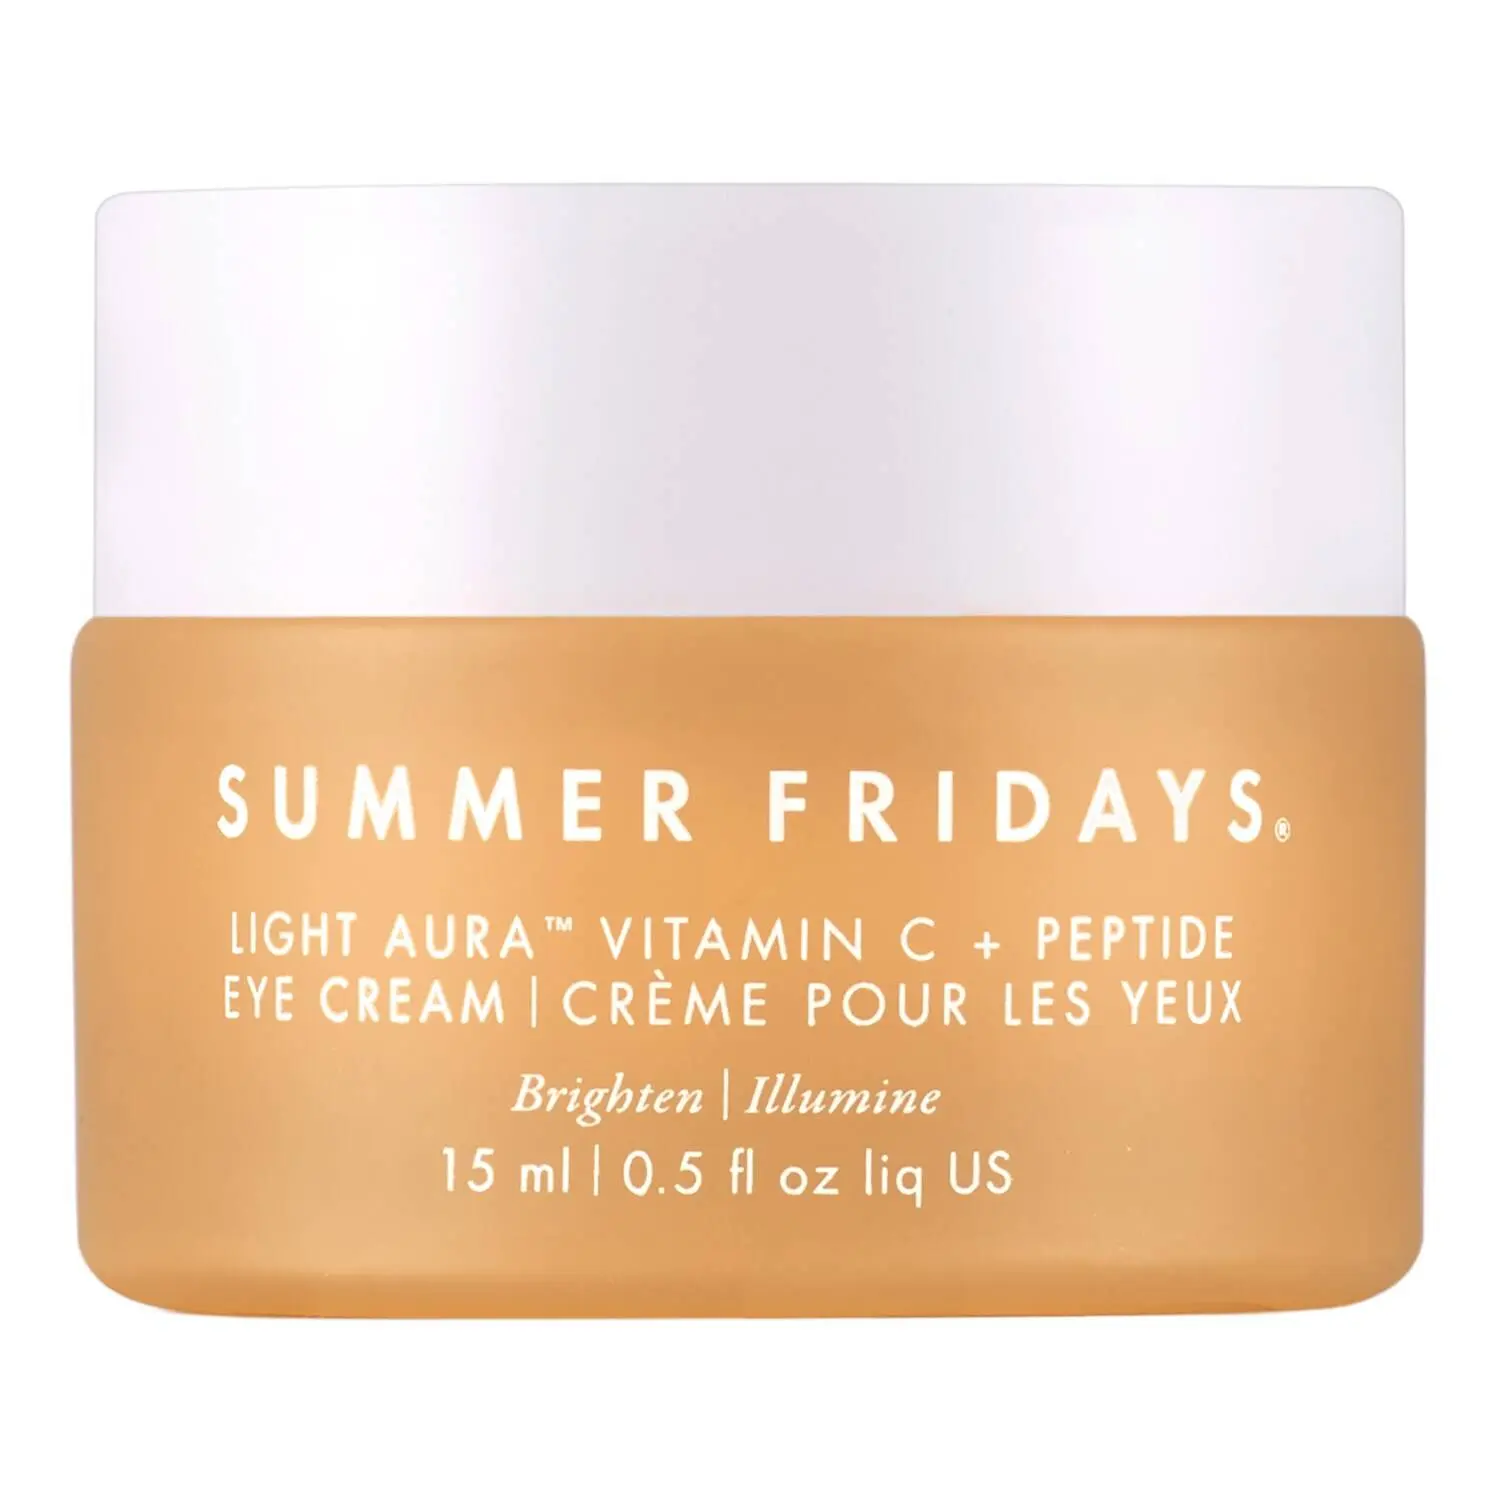 SUMMER FRIDAYS Light Aura Vitamin C + Peptide Eye Cream 15ml Discounts and Cashback